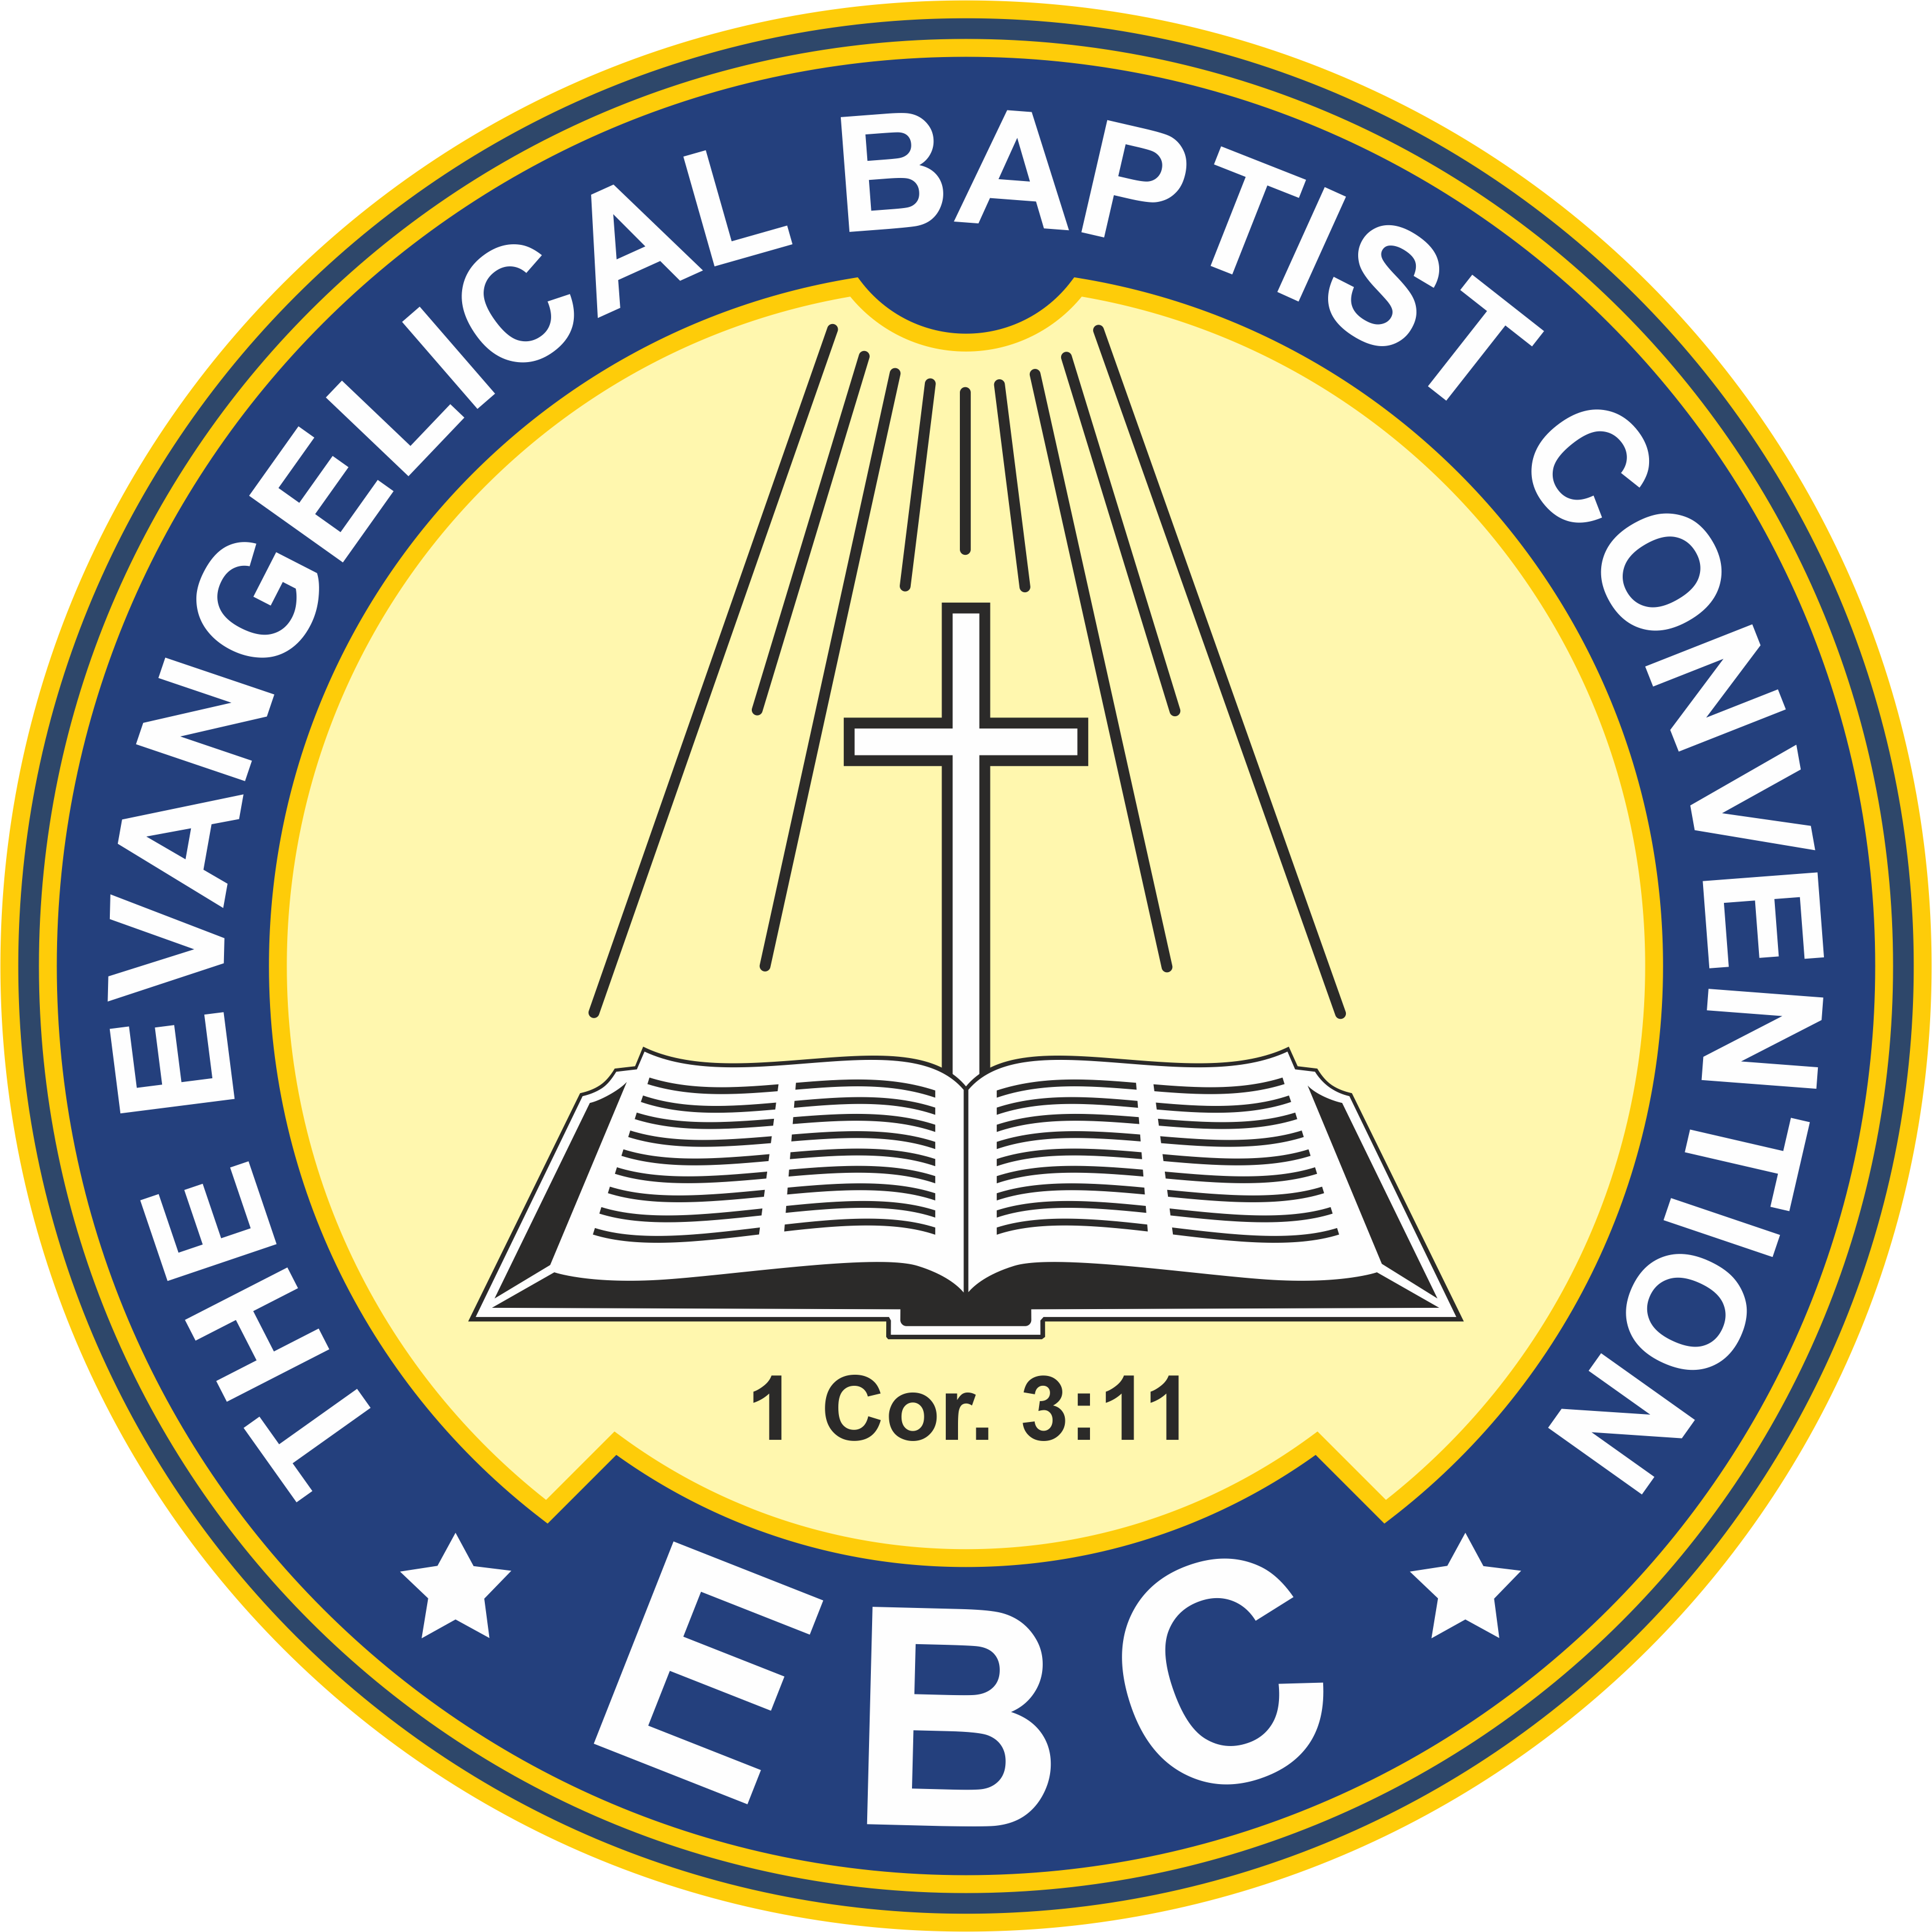 ebc logo 201610 13